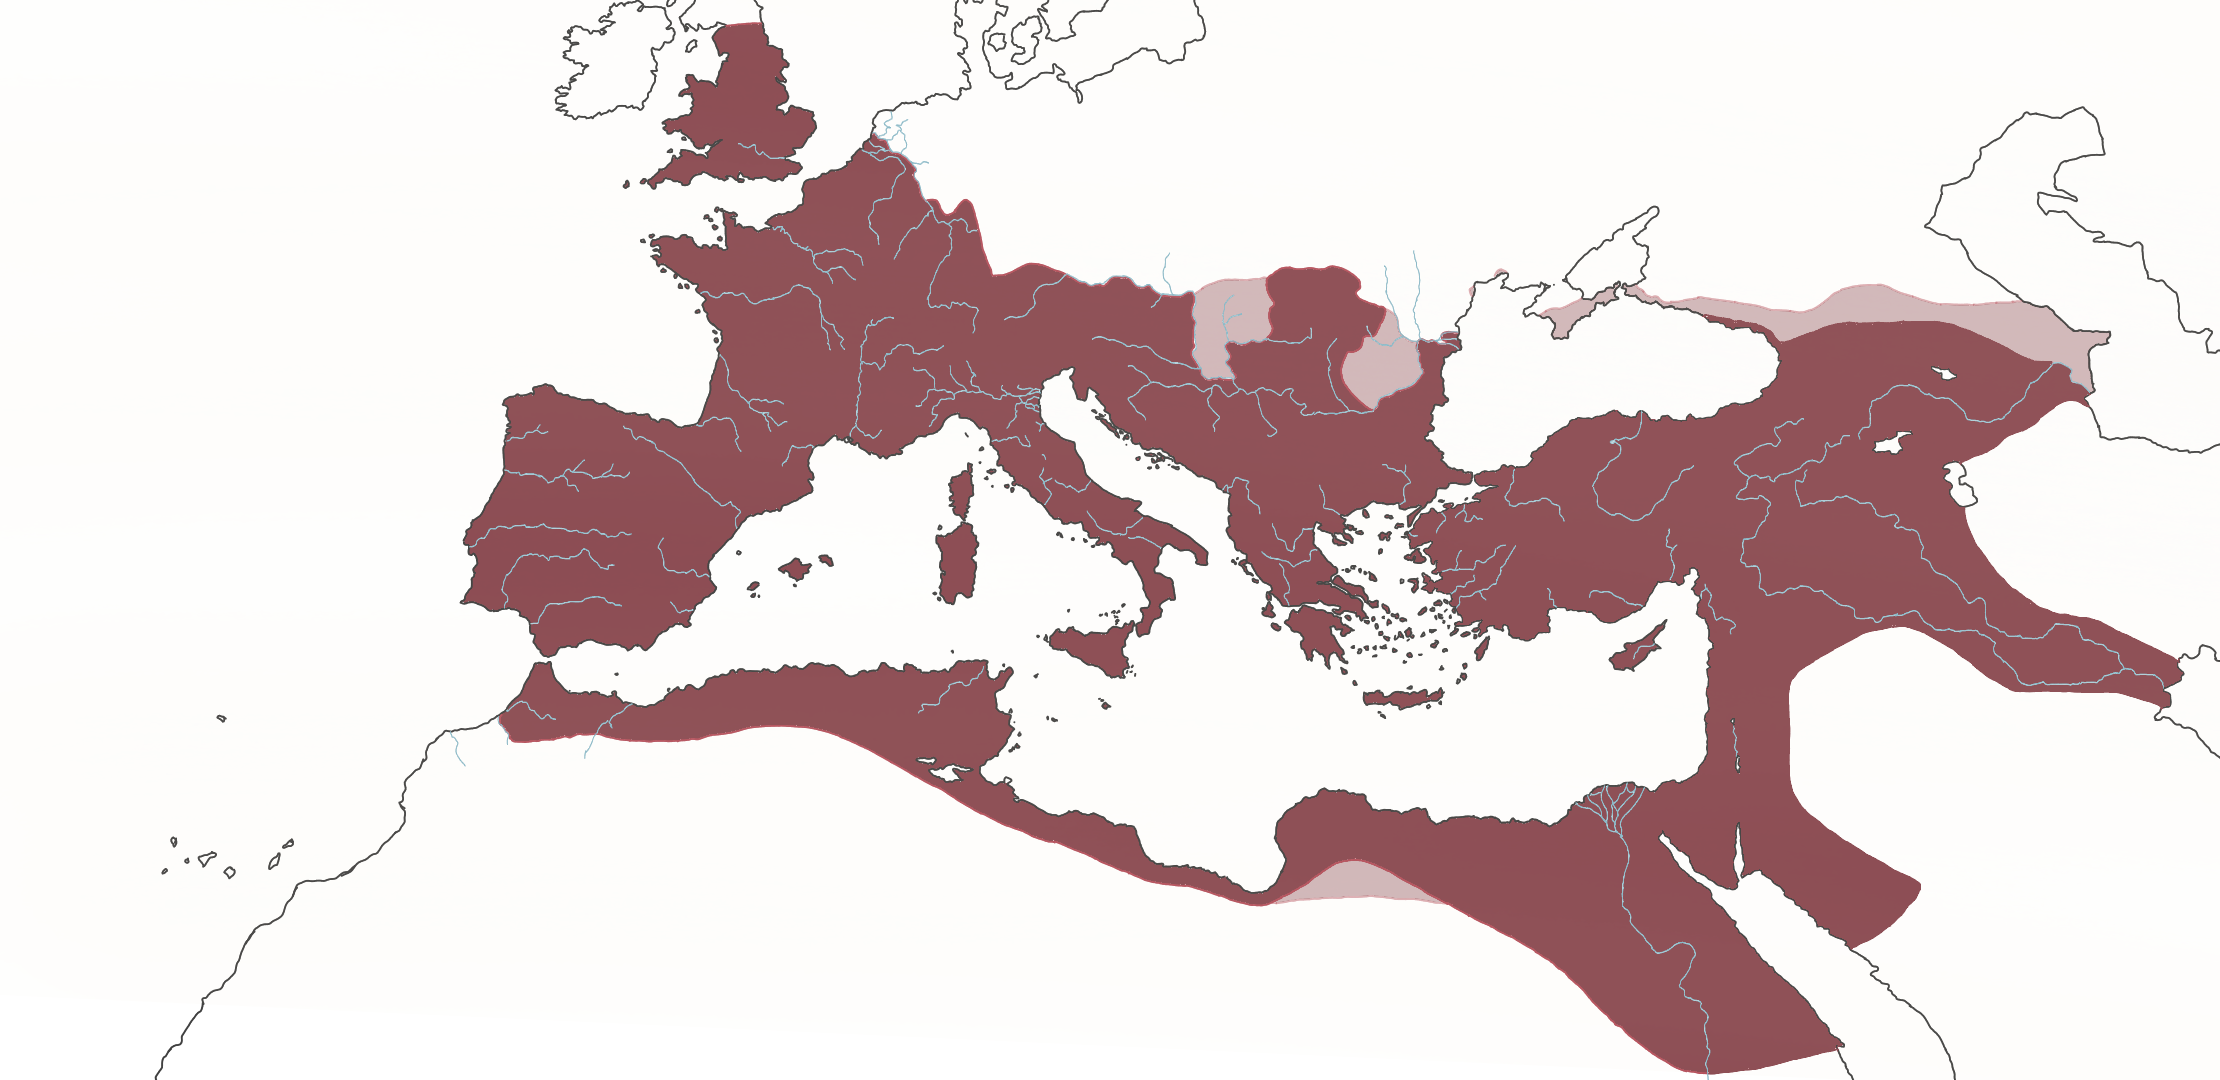 Roman Empire Chart